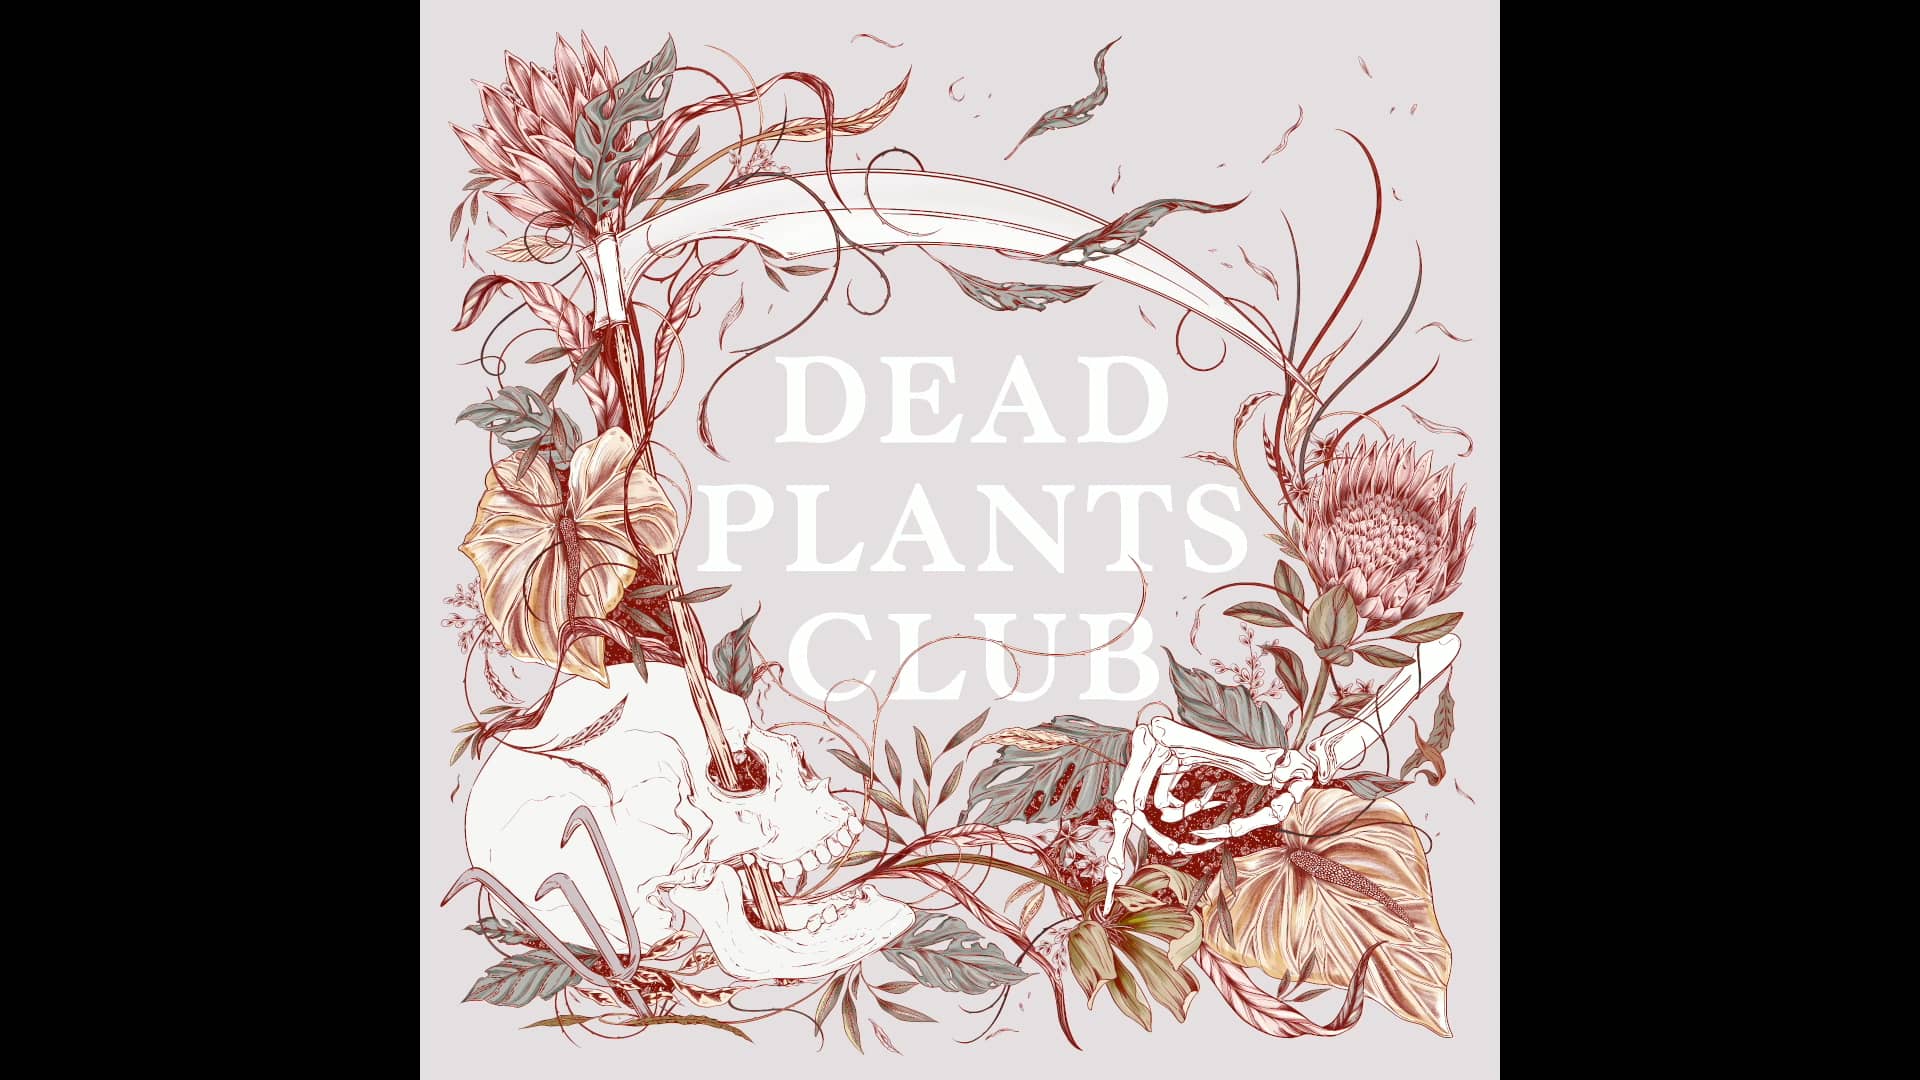 Dead Plants Club on Vimeo